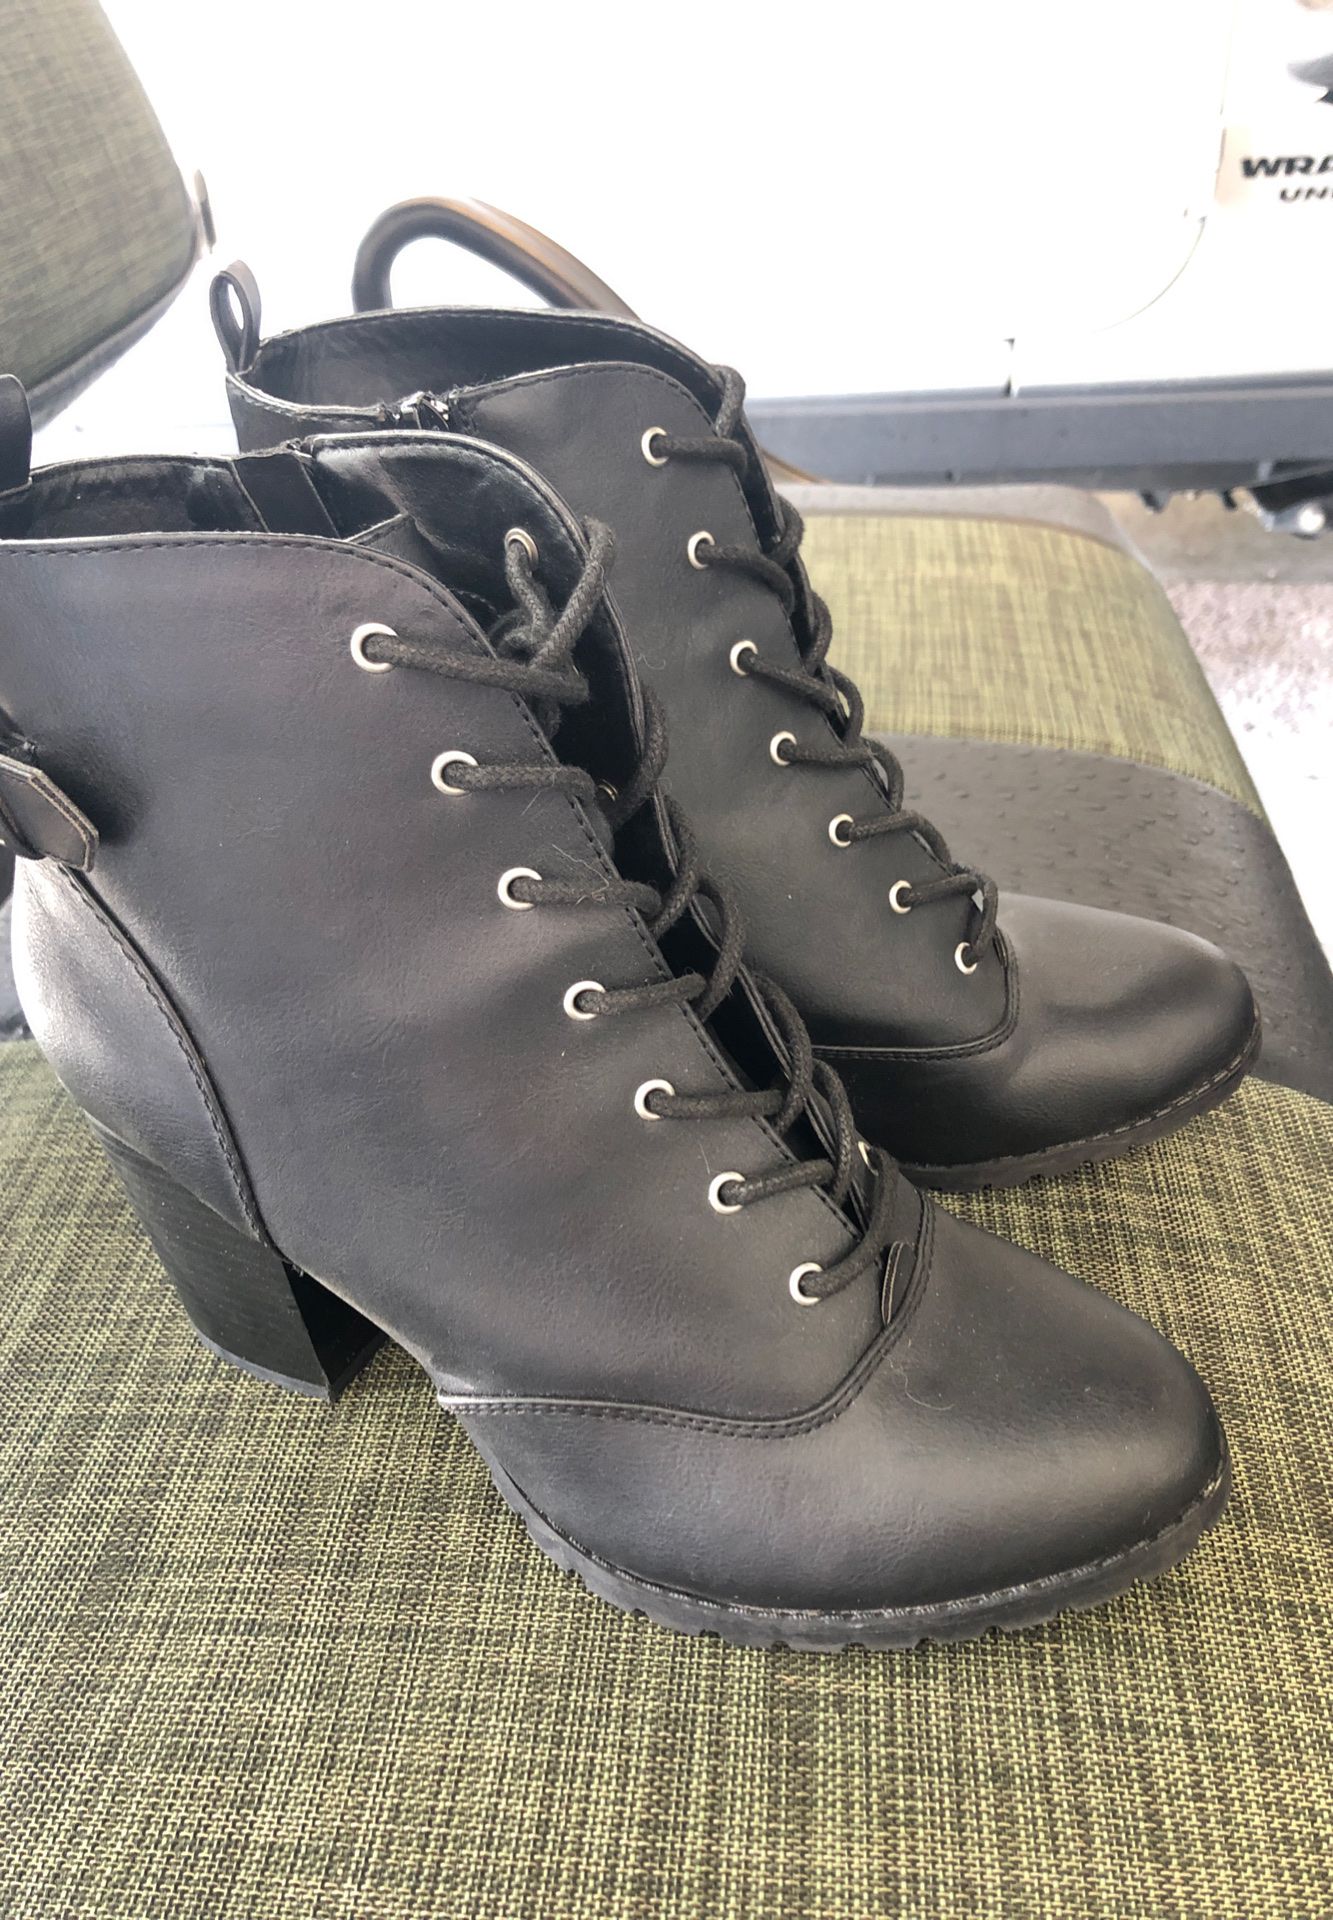 Black boots size 10